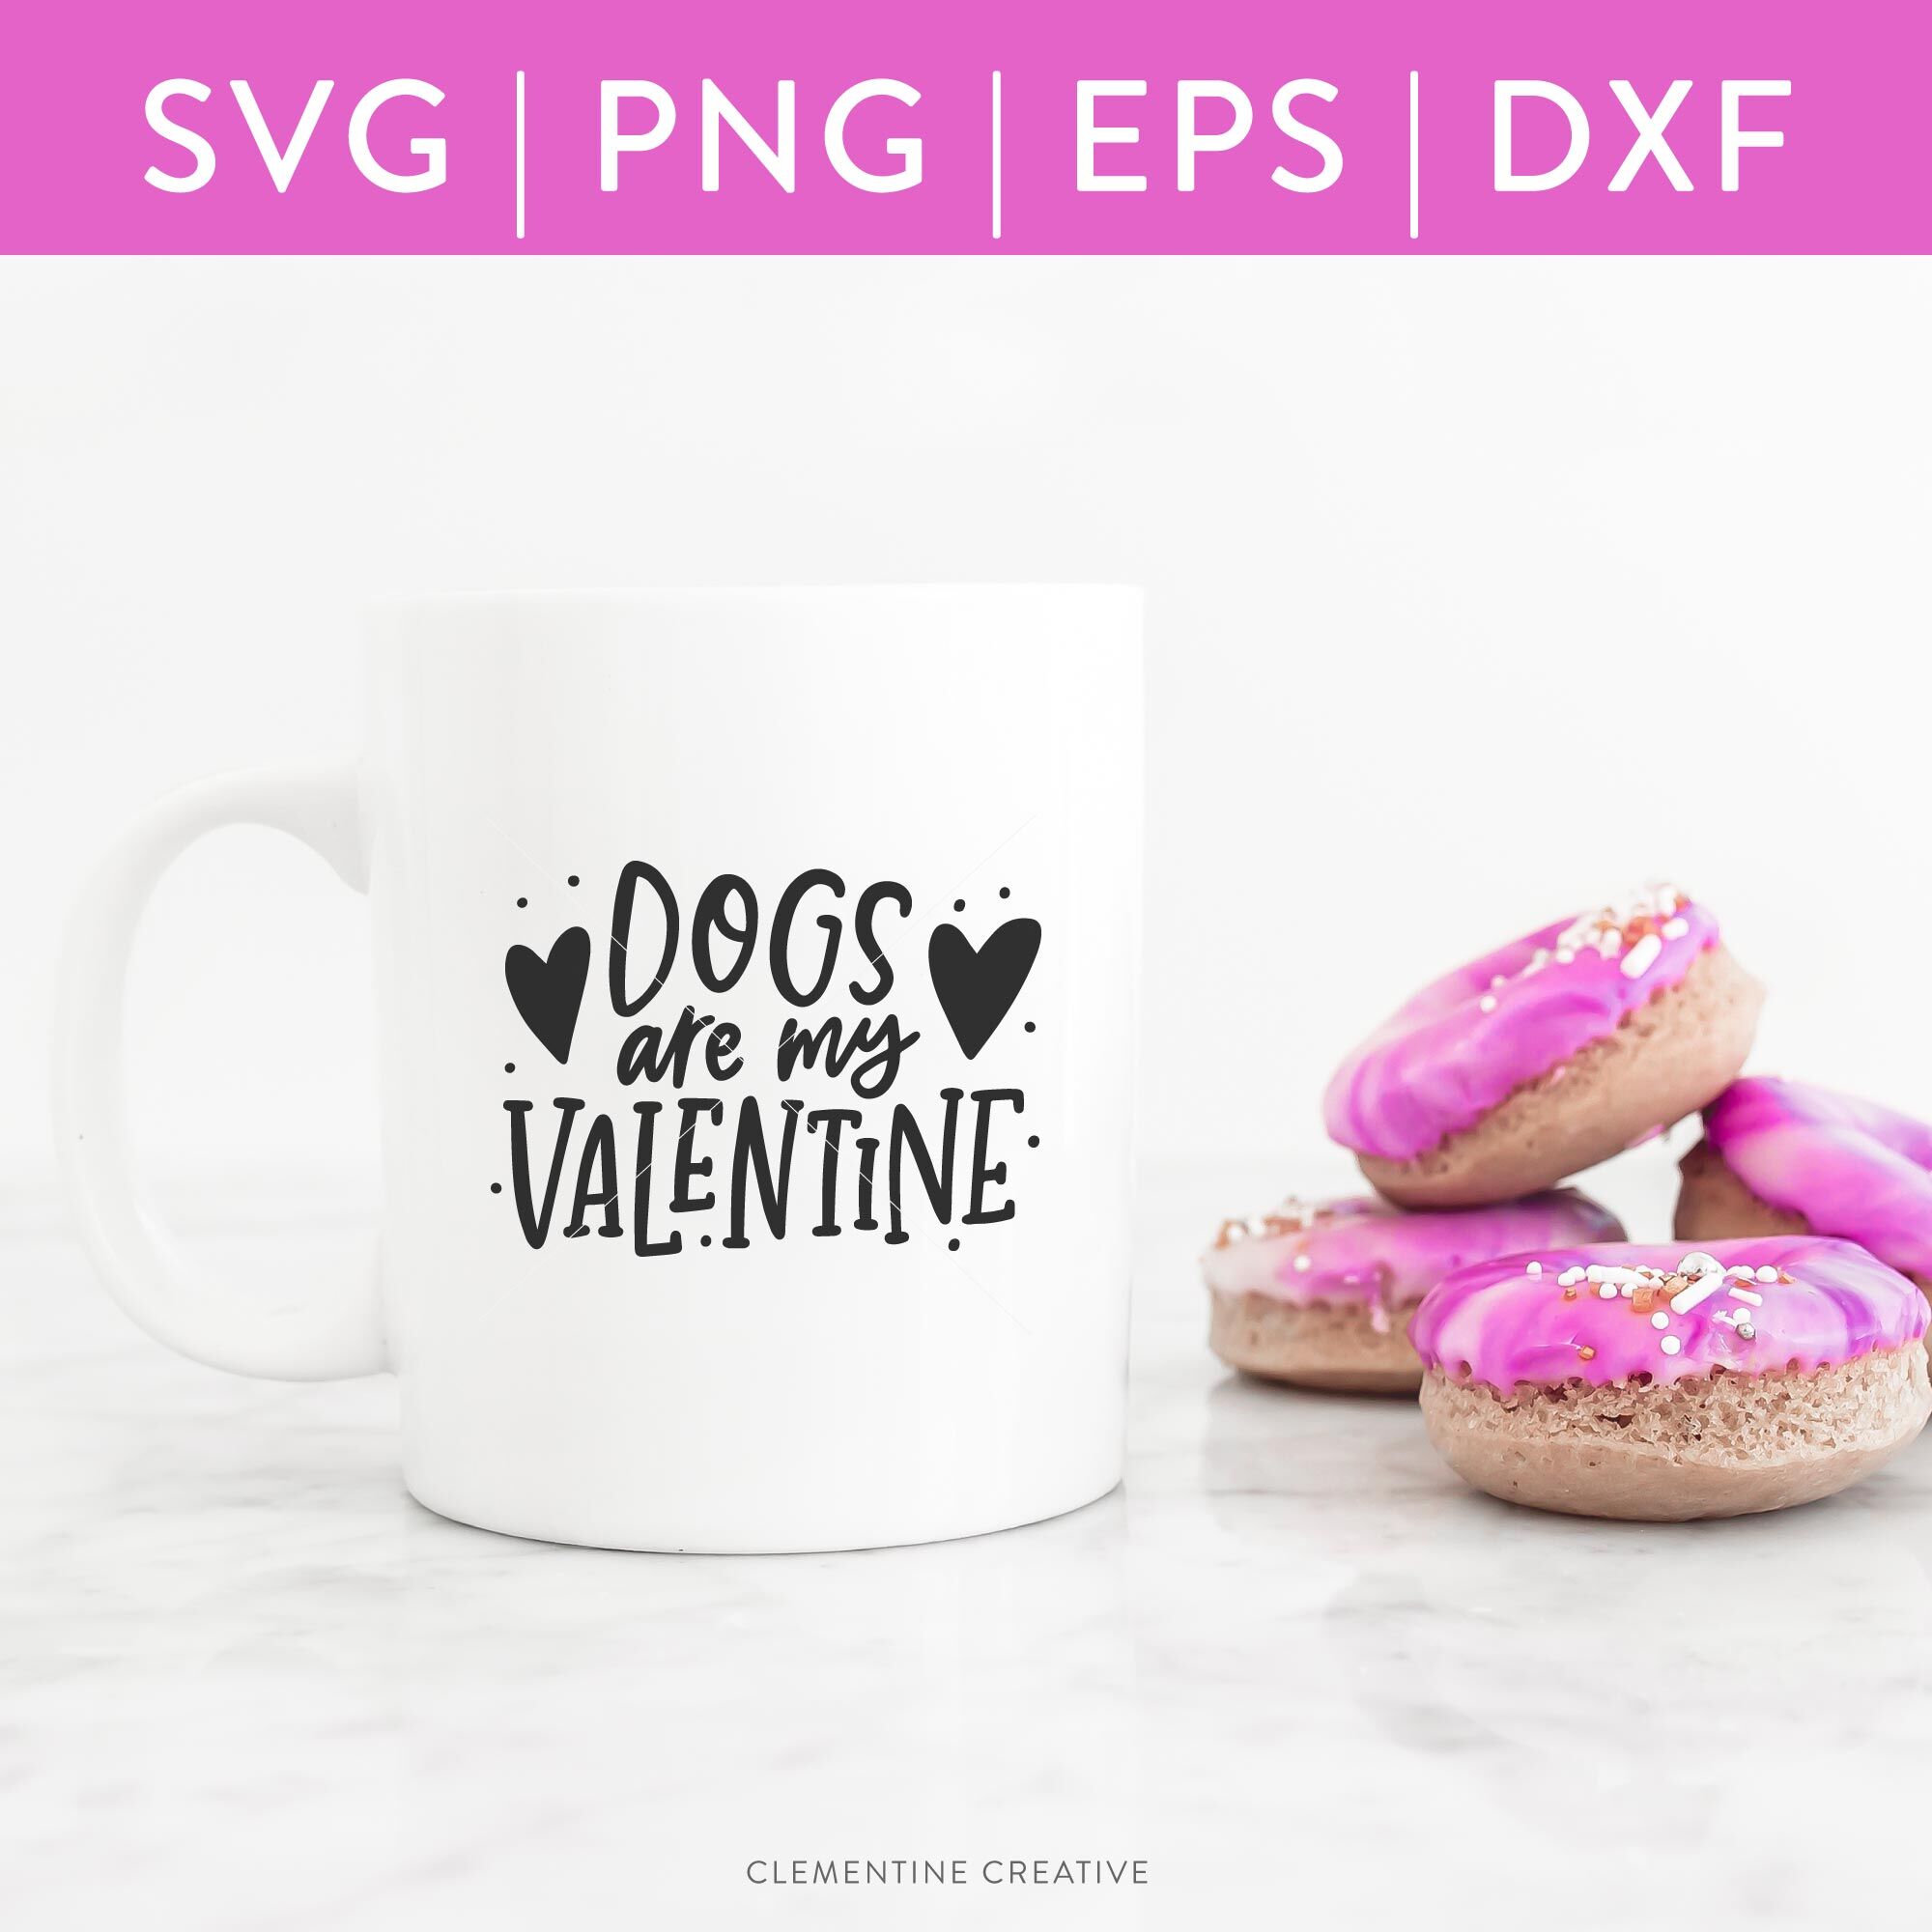 Dogs Are My Valentine SVG | Valentine SVG Cut File | Cricut Cut Files